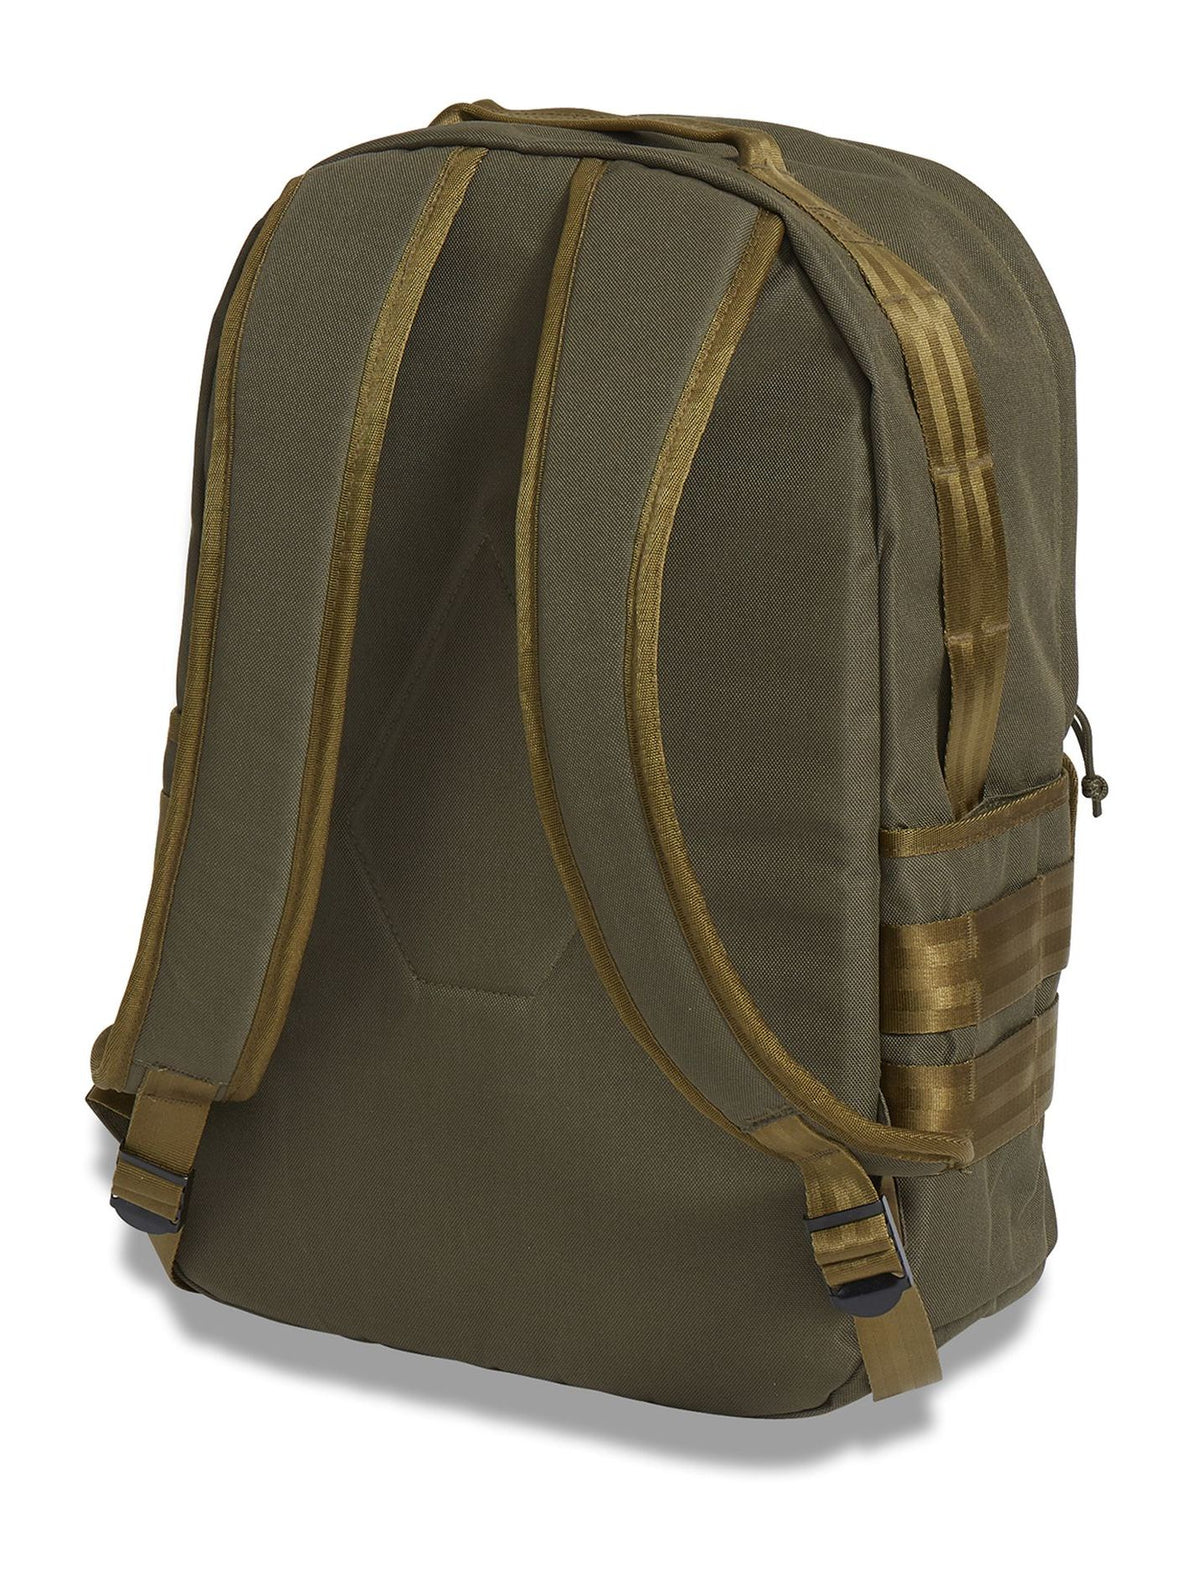 Jp Mil Backpack - Military